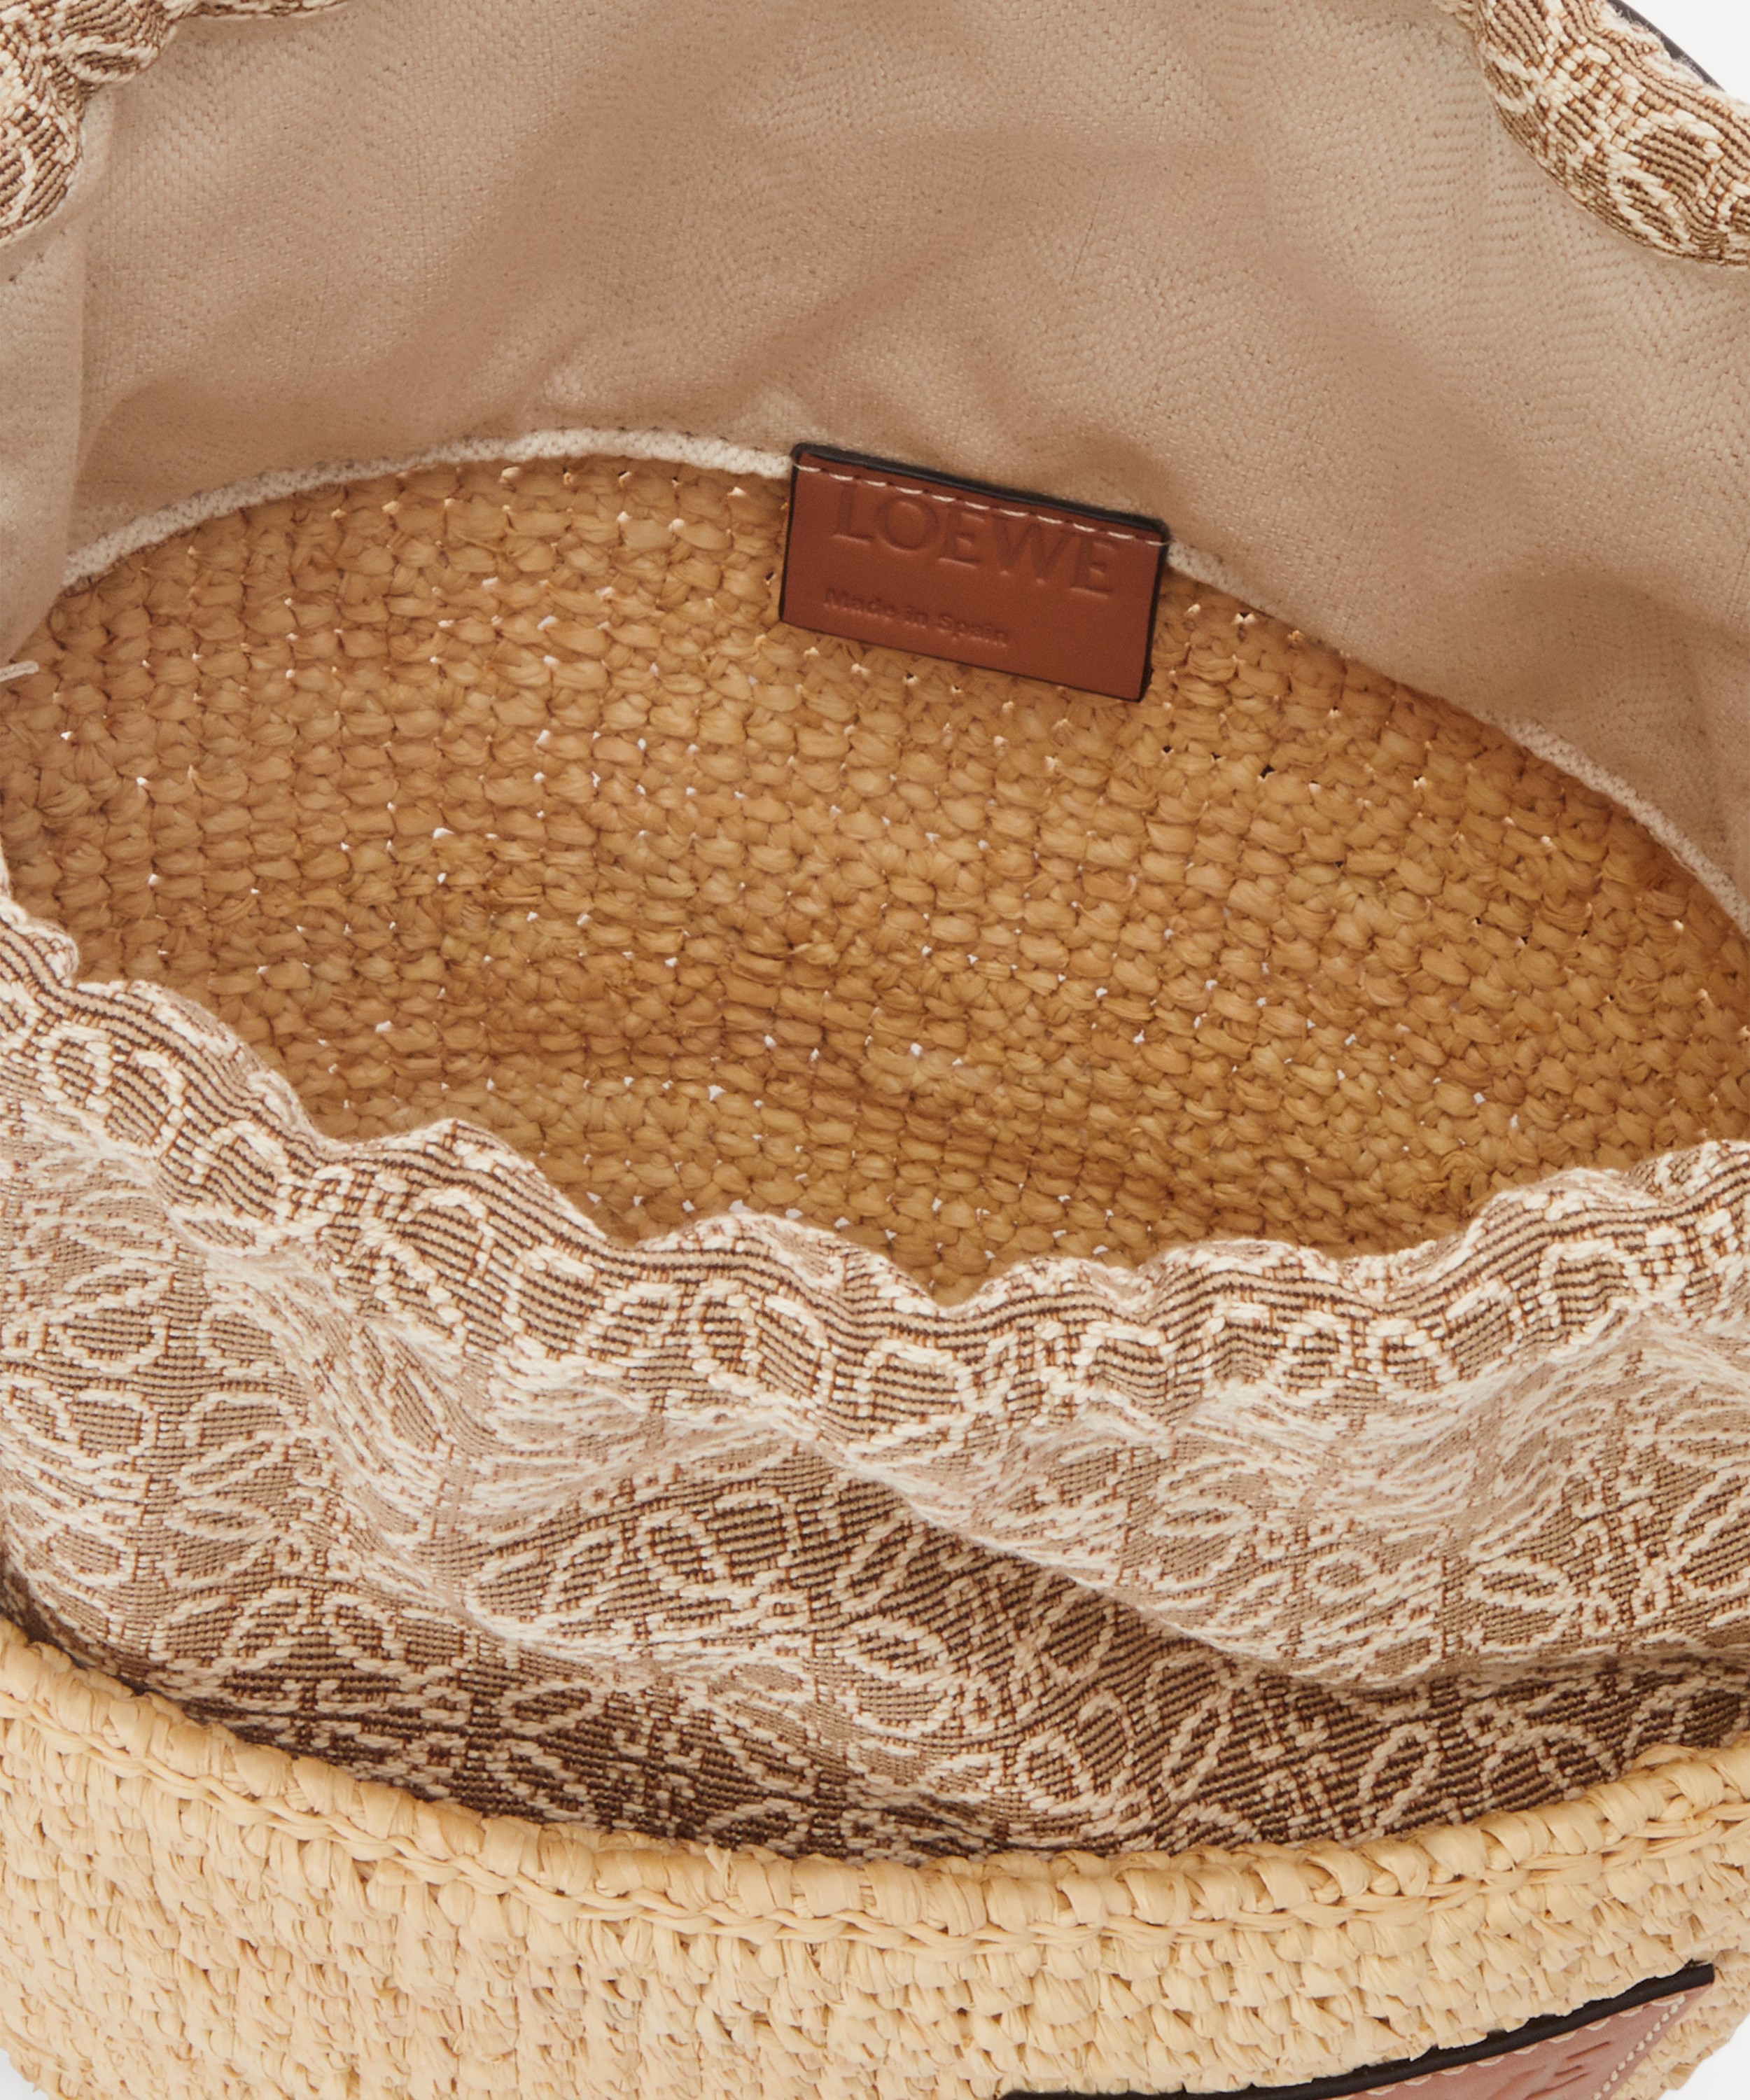 Loewe - Pochette Bag In Raffia, Anagram Jacquard, And Calfskin